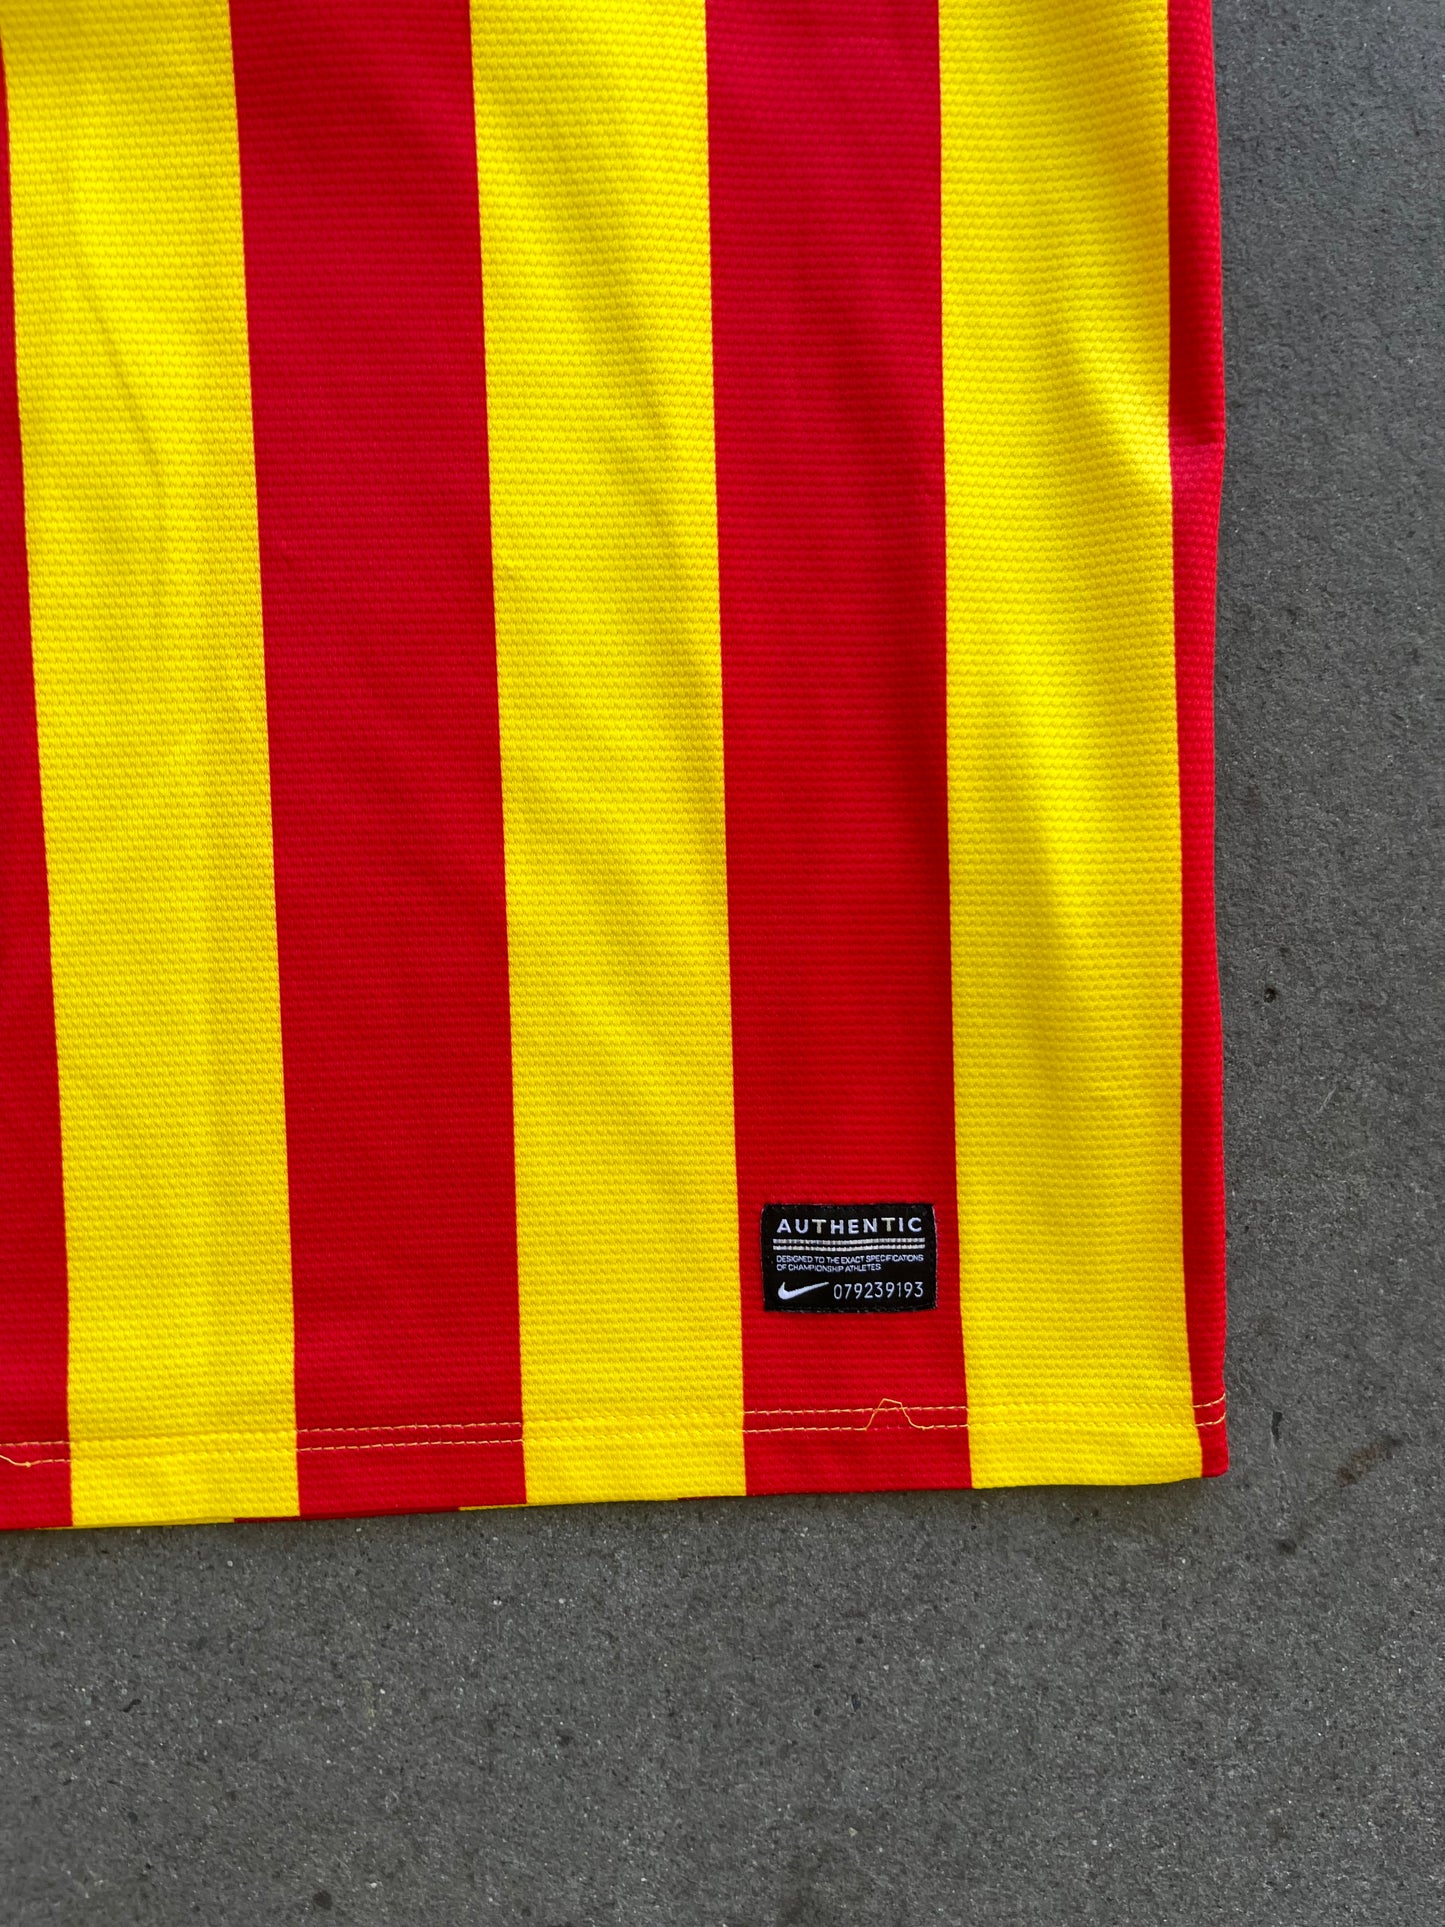 (M) 13/14 Home Messi Kit